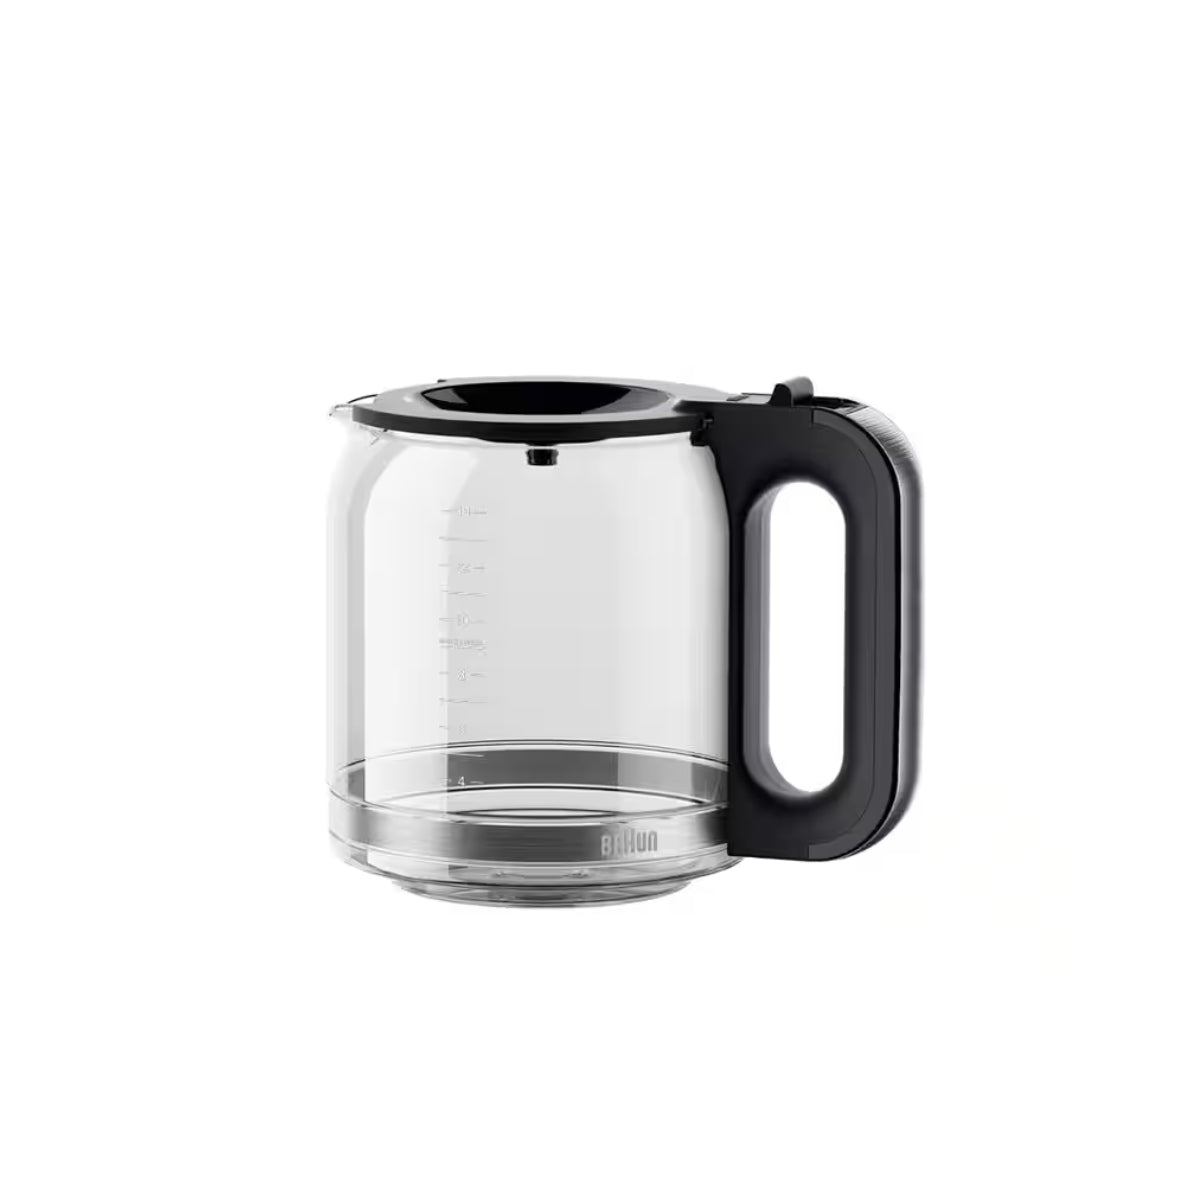 Braun PureFlavor 14-Cup Digital Drip Coffee Maker - KF5650